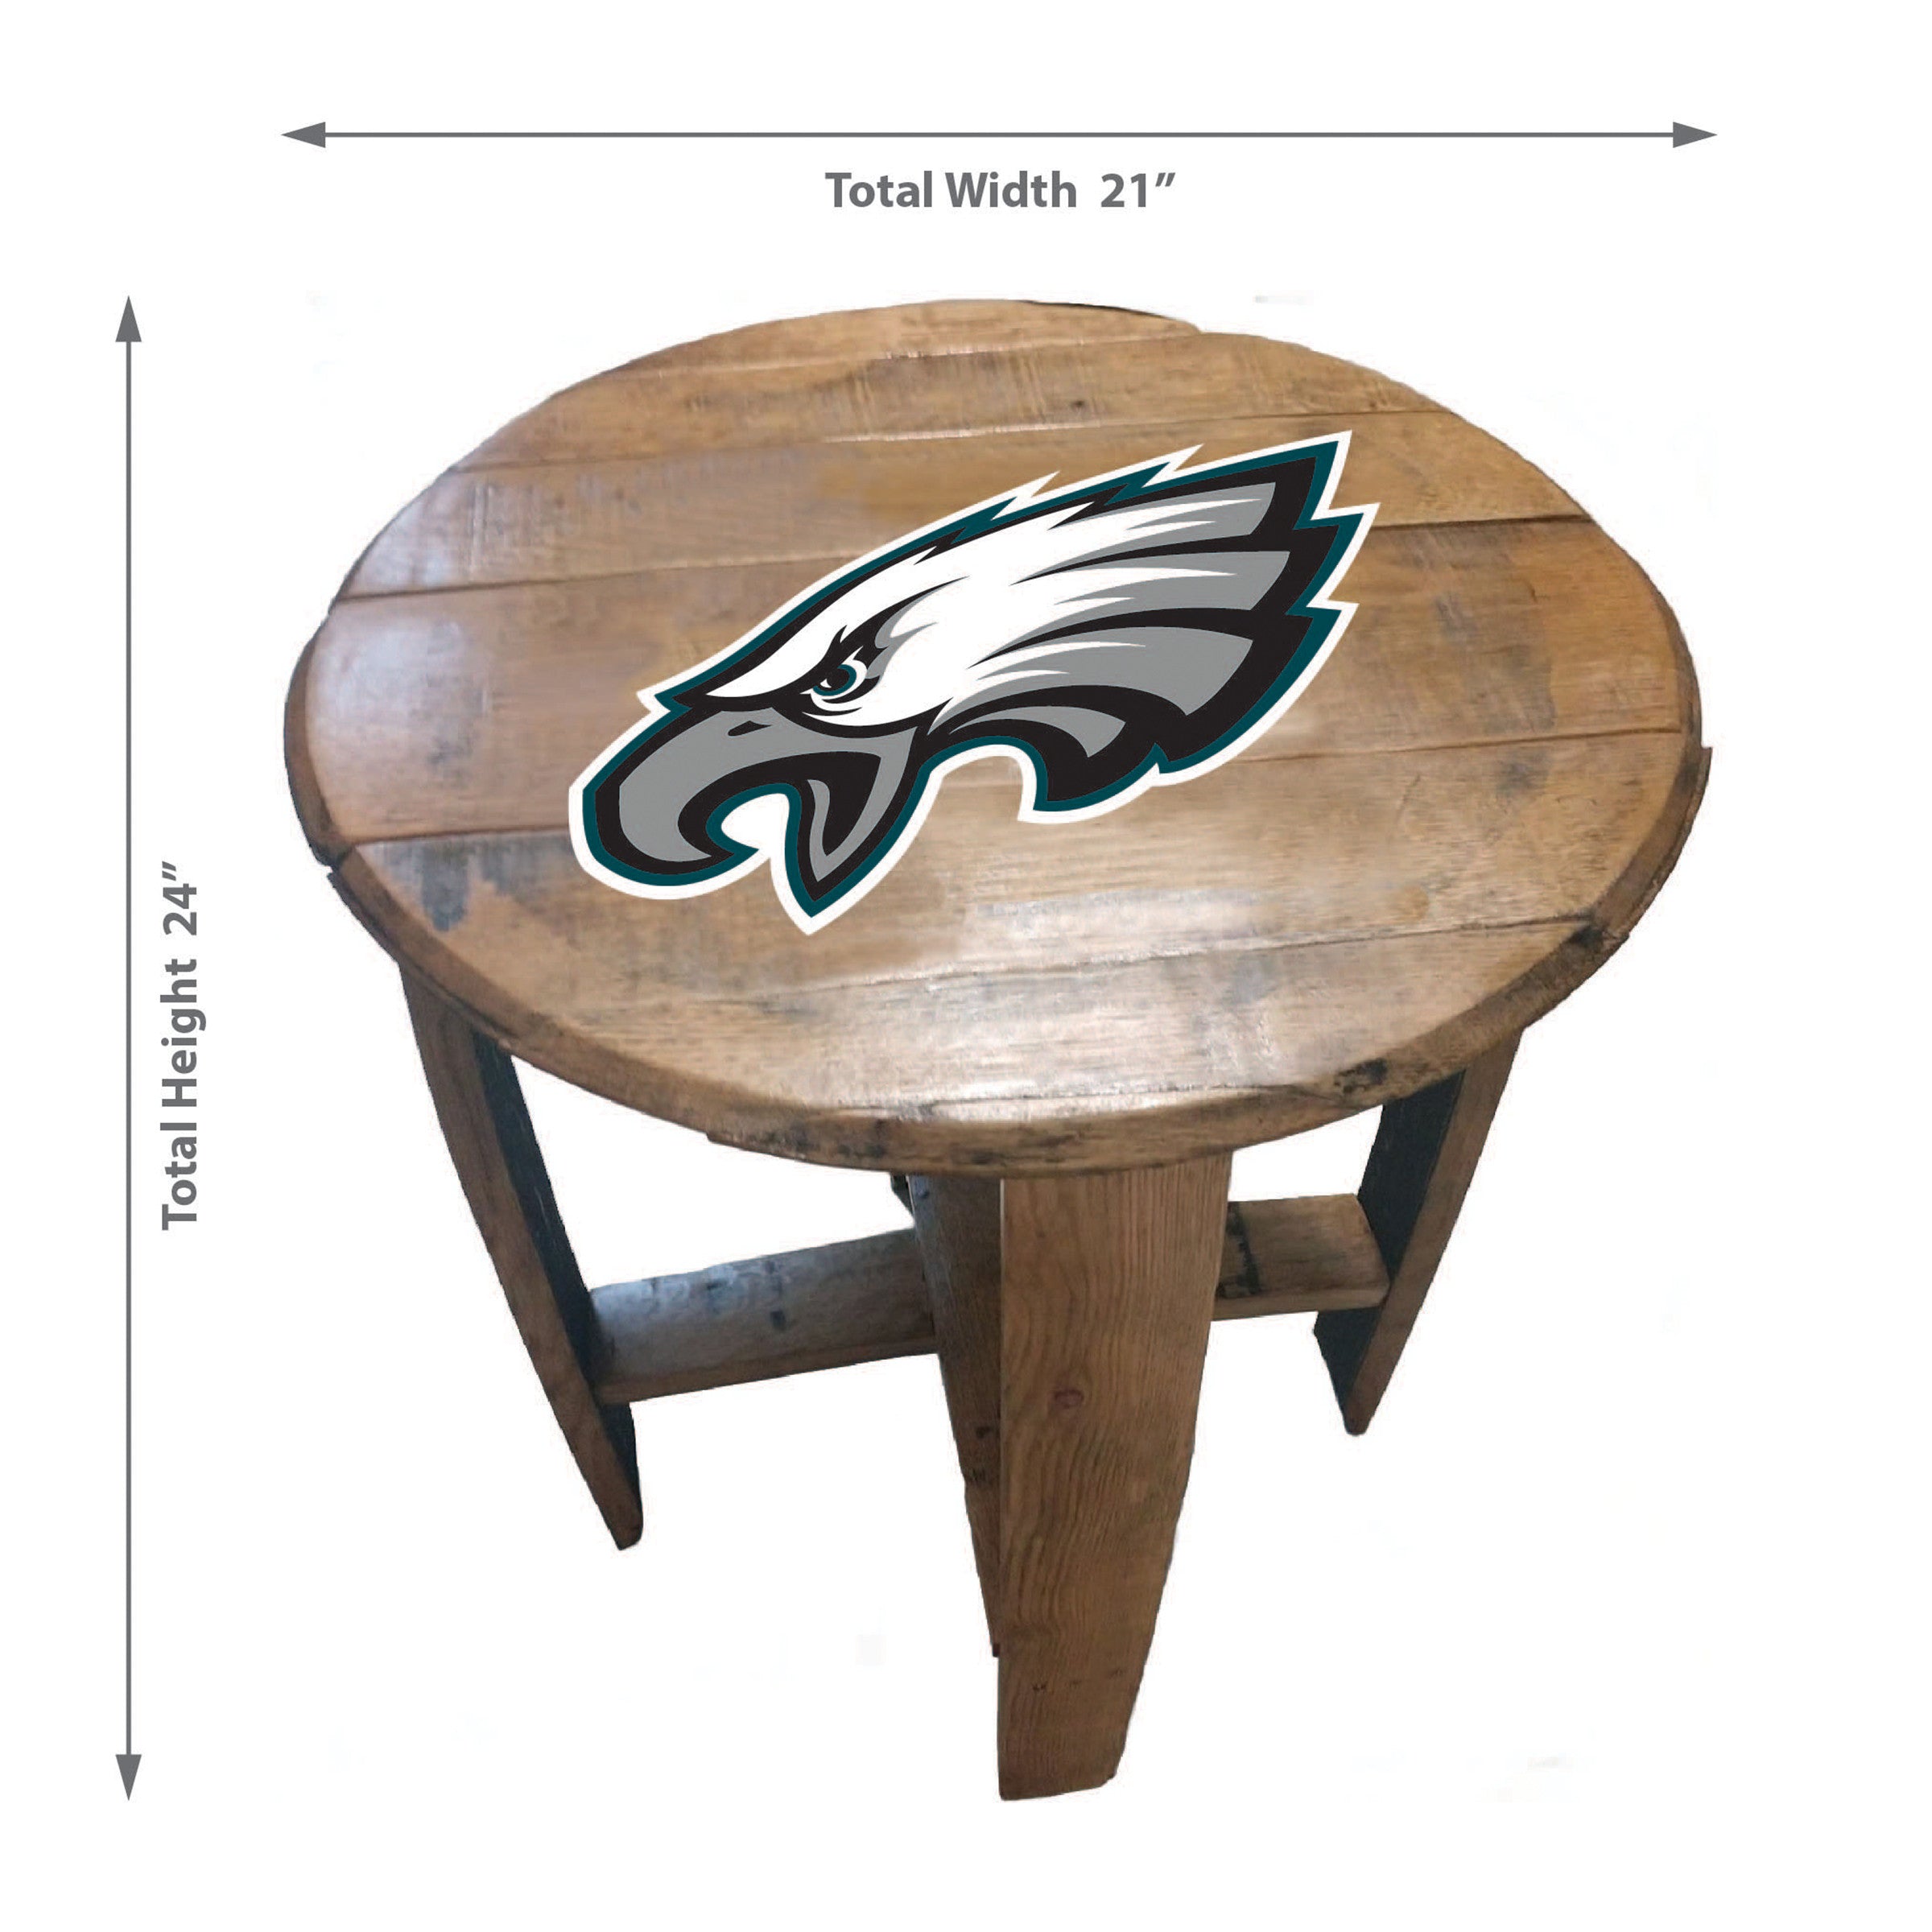 Imperial Philadelphia Eagles Oak Barrel Table